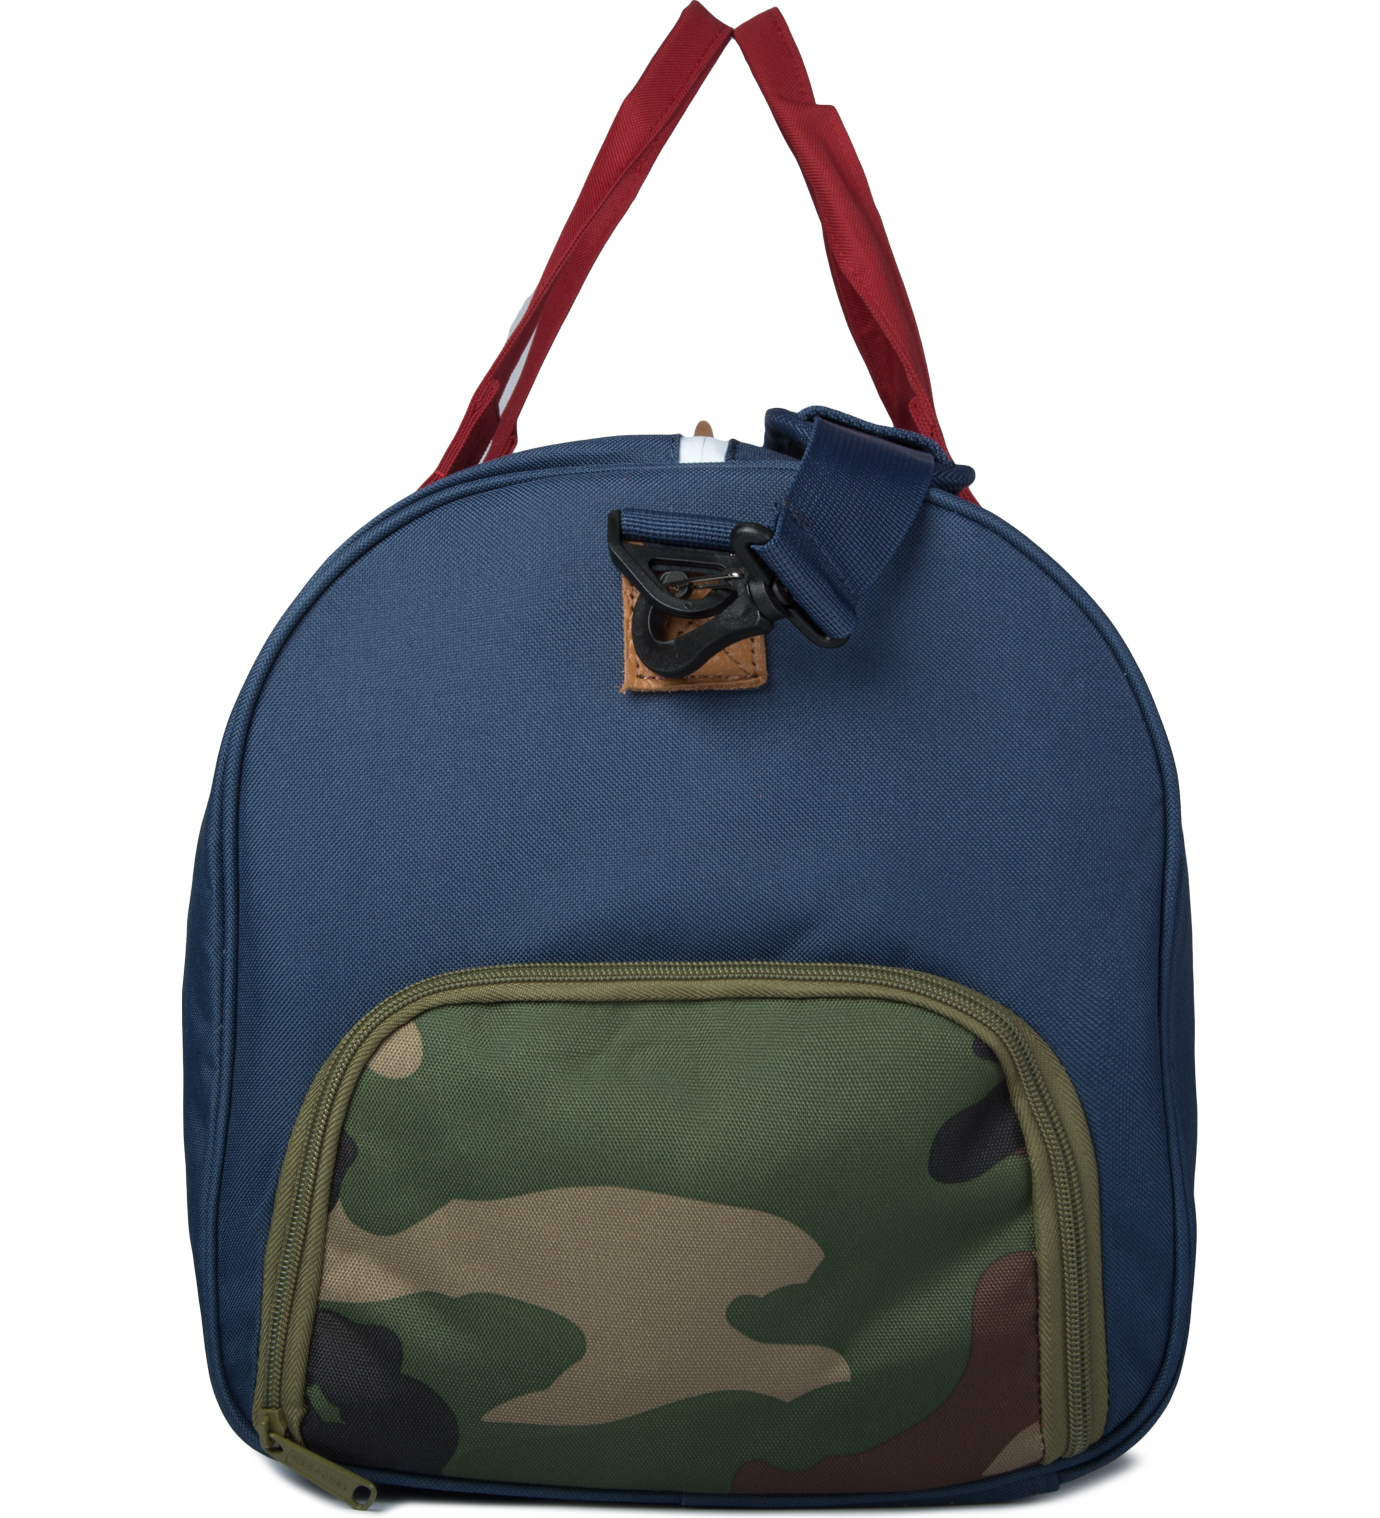 Herschel supply co. Navy/Red/Woodland Camo Novel Duffle Bag in Blue for Men (navy) | Lyst